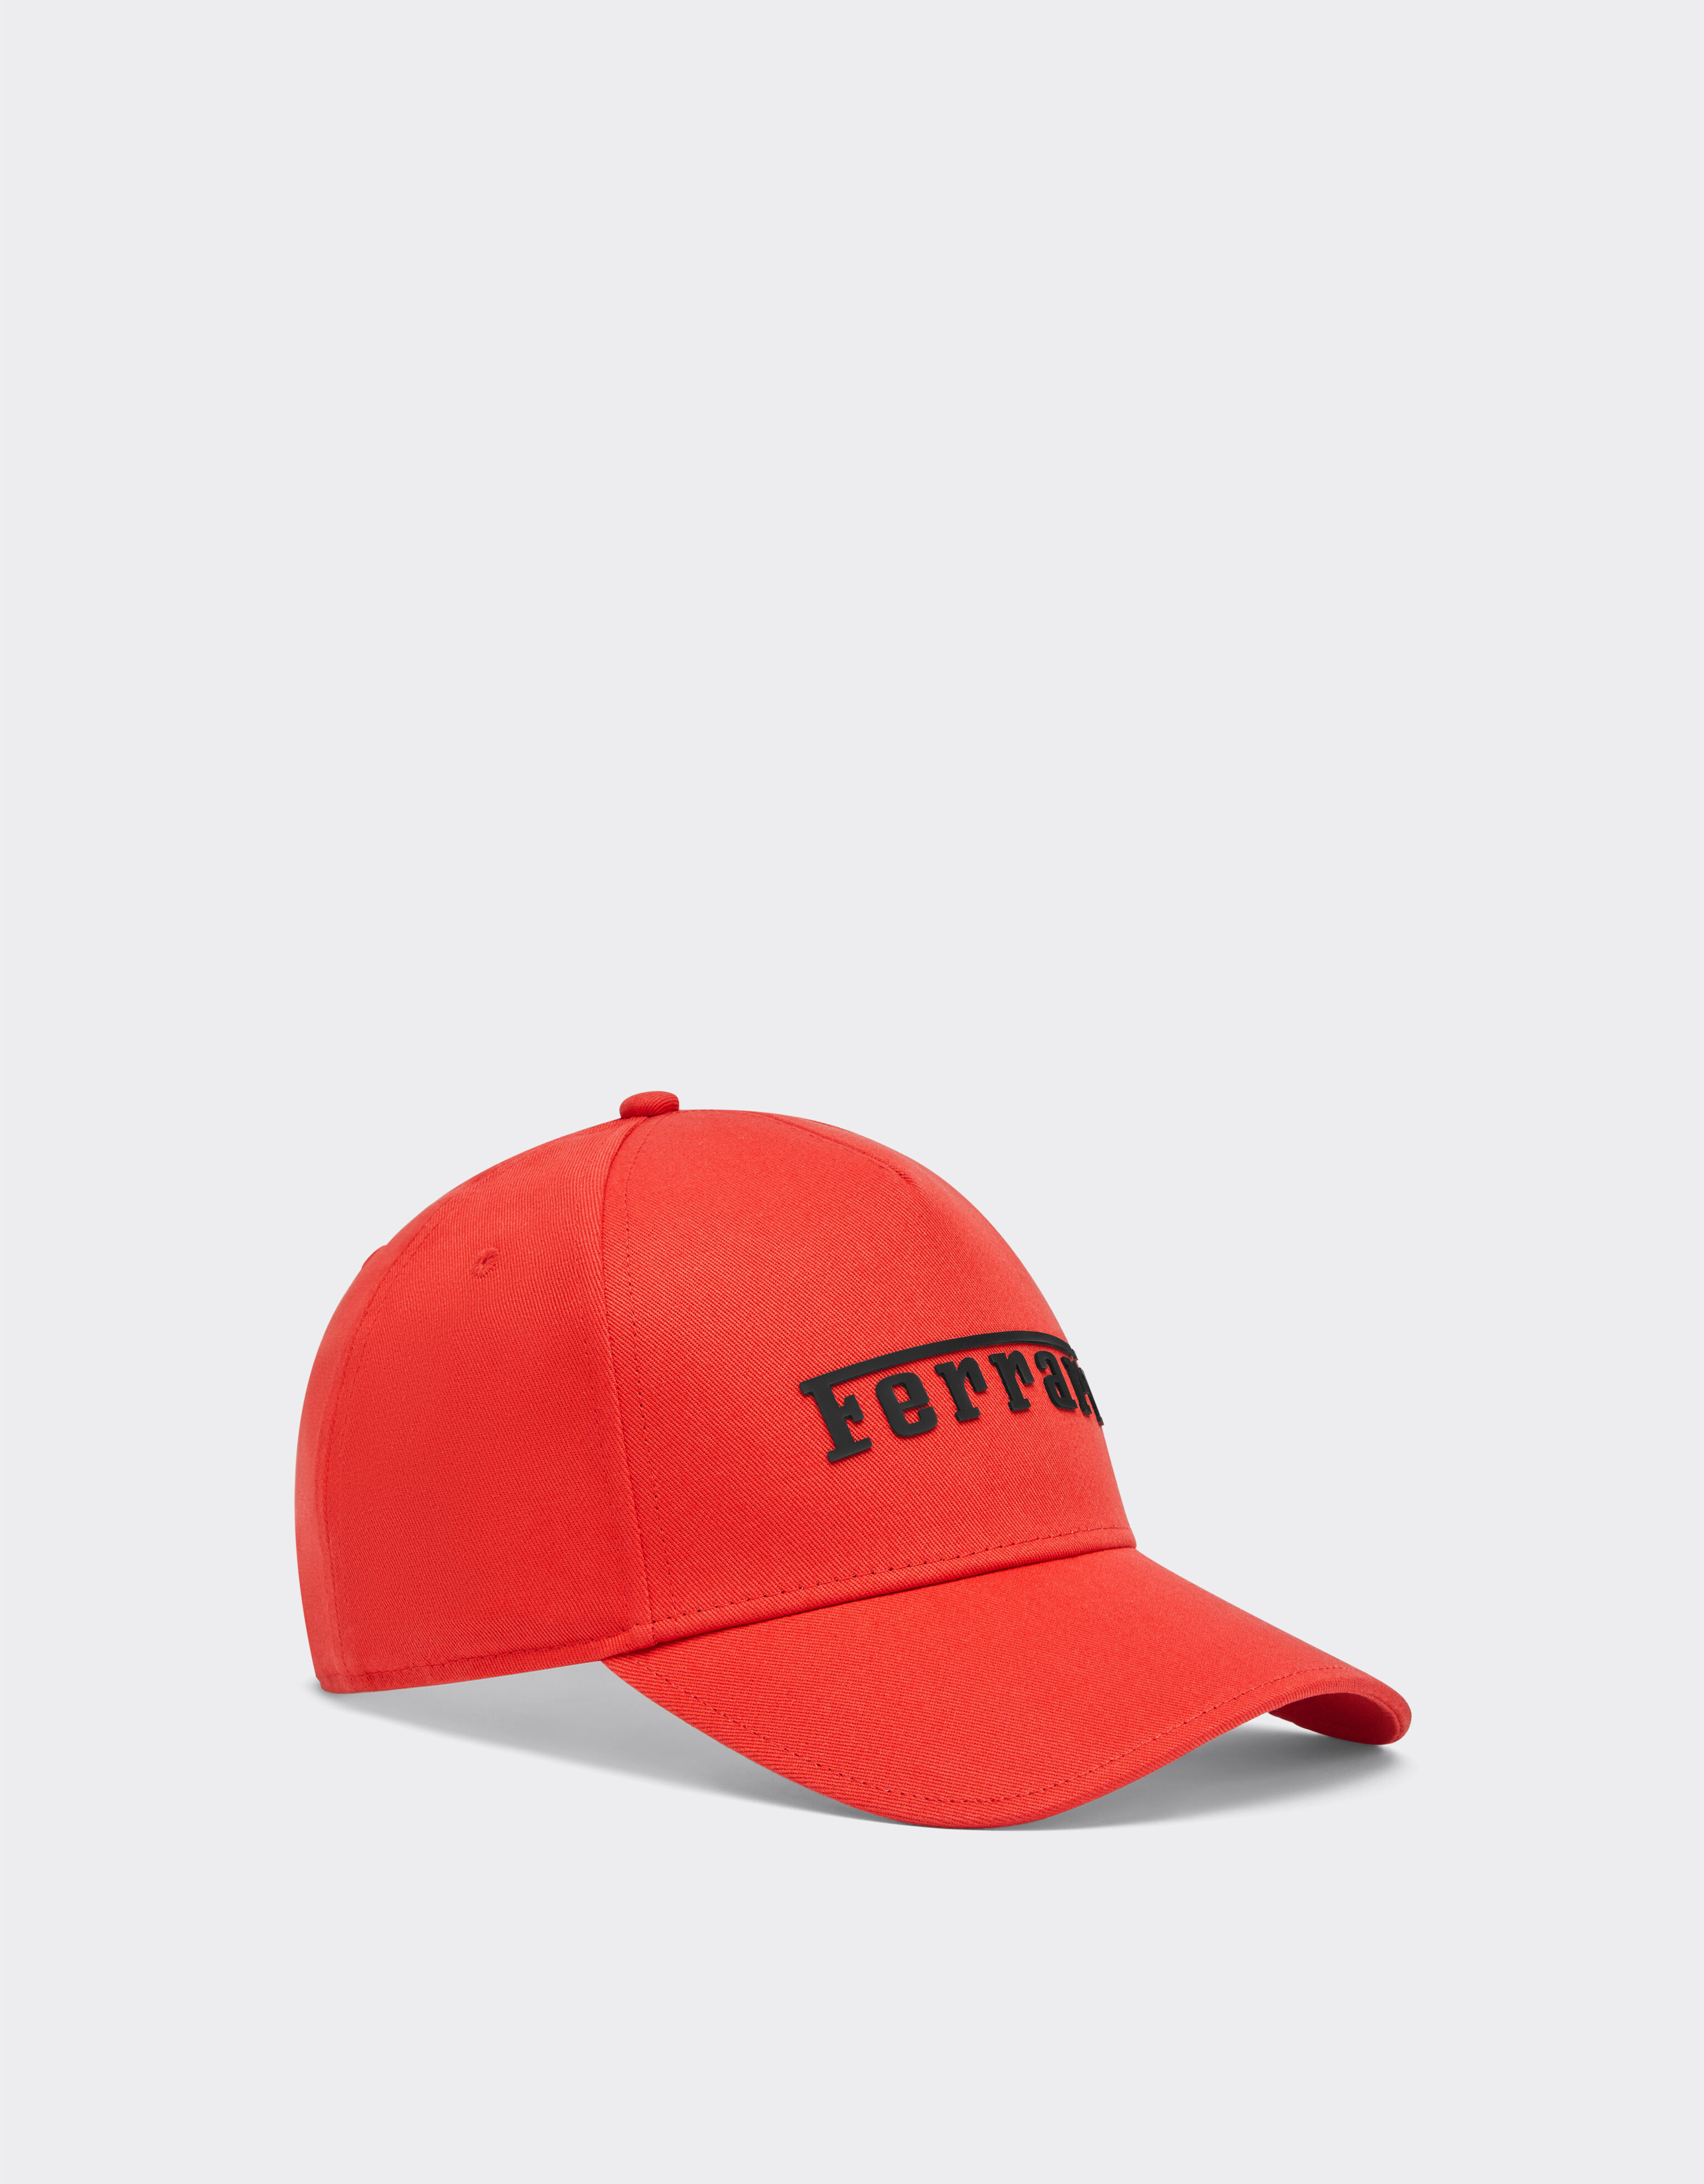 Ferrari Baseball hat with rubberised logo Rosso Corsa 20403f